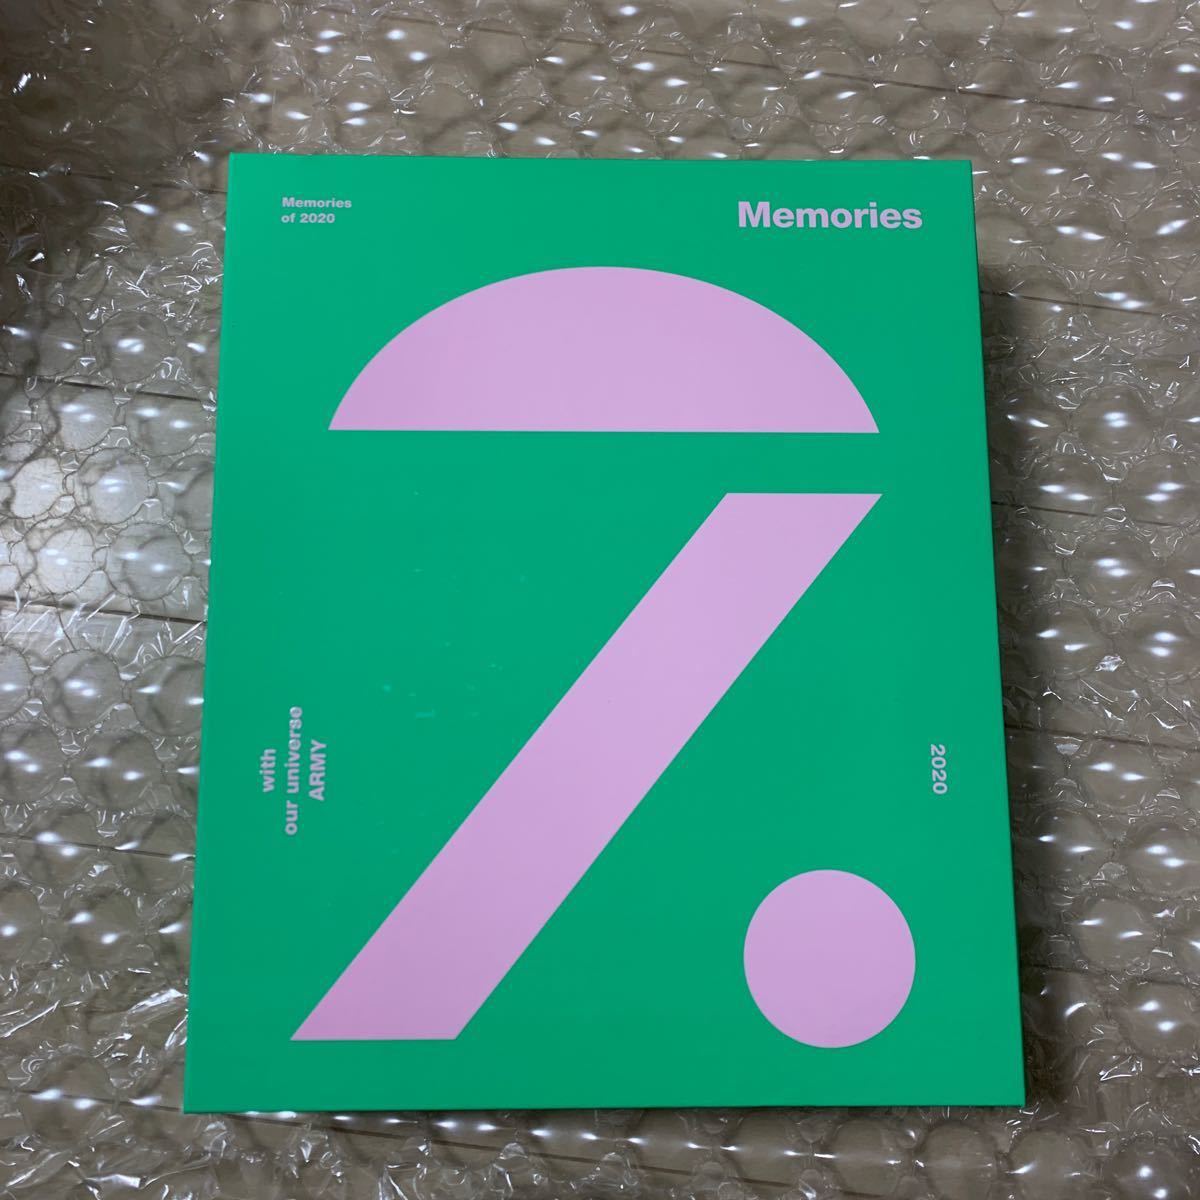 BTS MEMORIES 2020 Blu-ray 日本語字幕付き メモリーズ - zimazw.org